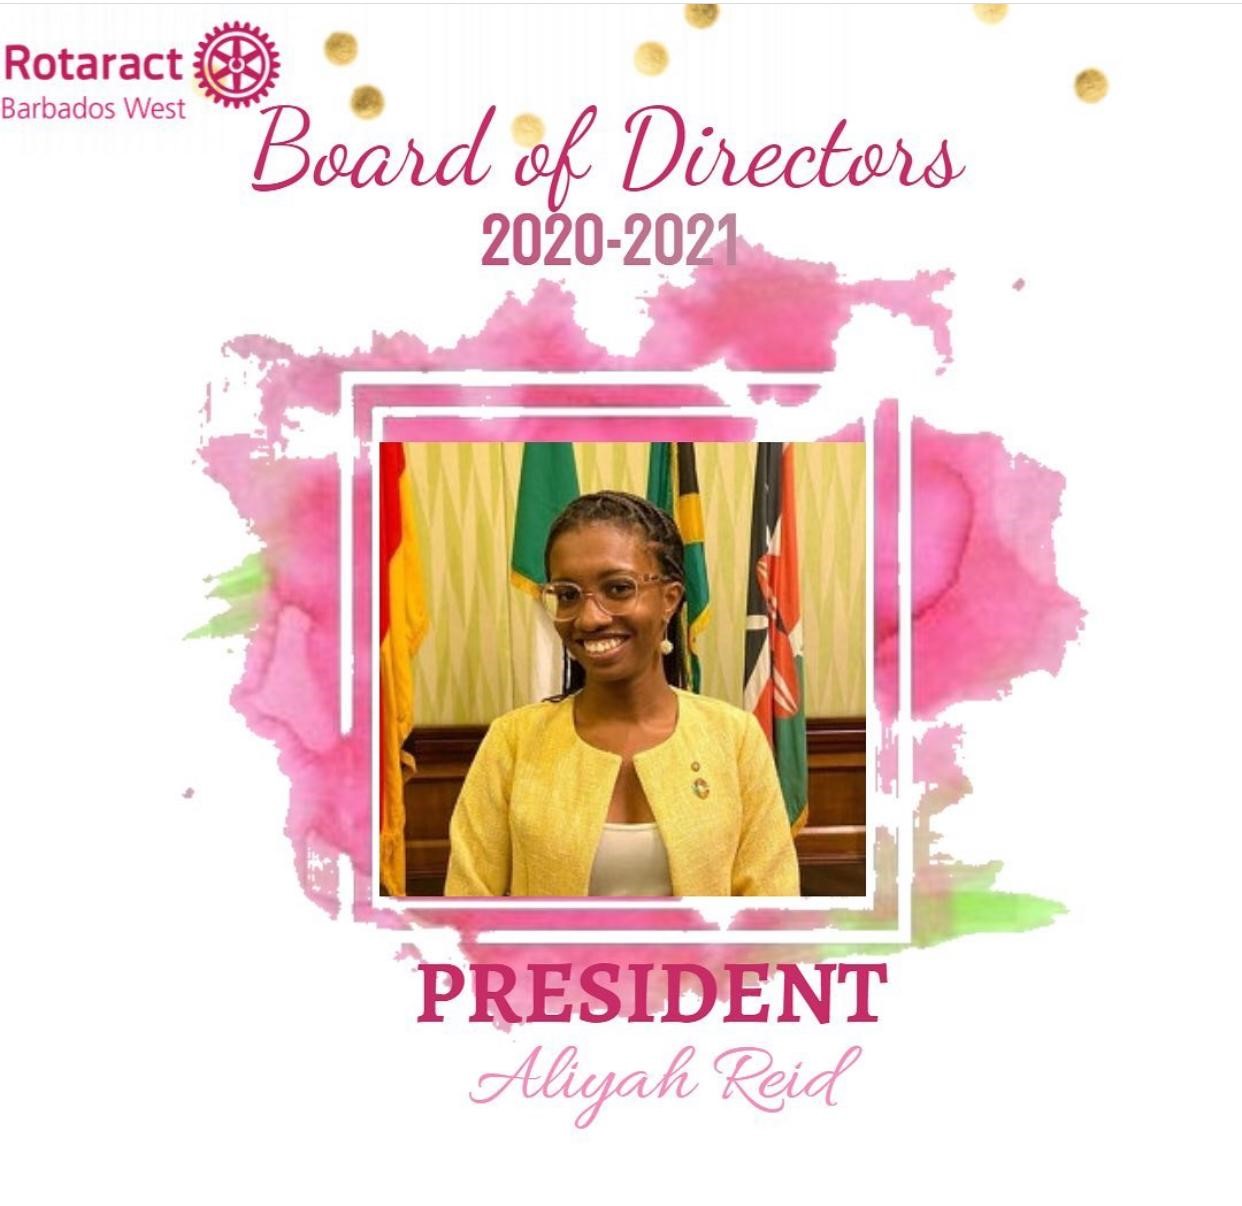 Rotaract President